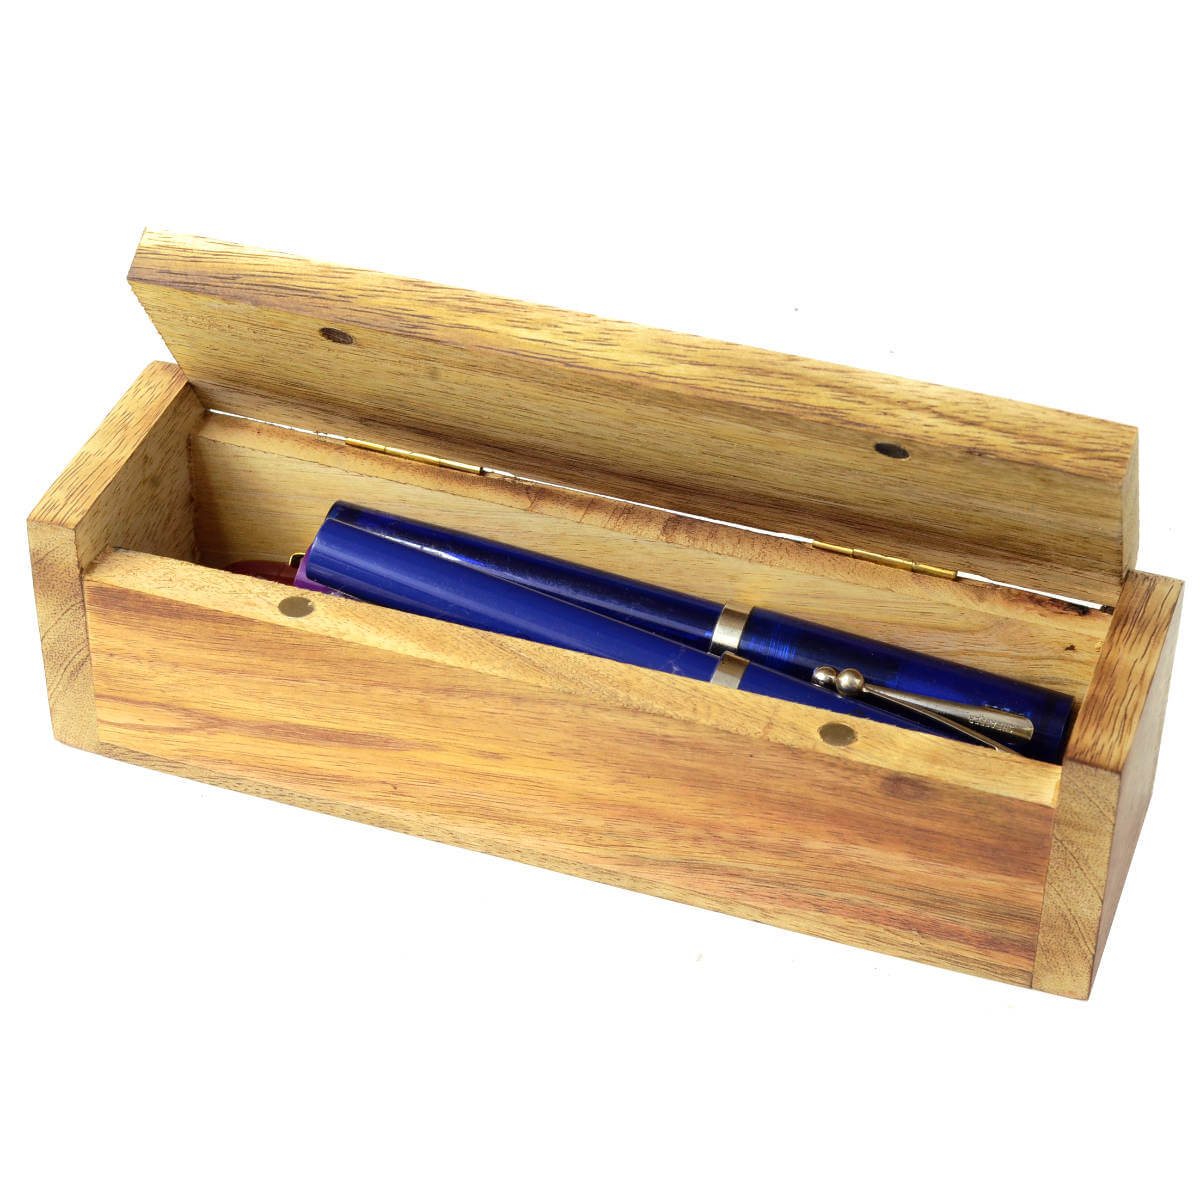 Solid wood pen box – 5 pens storage